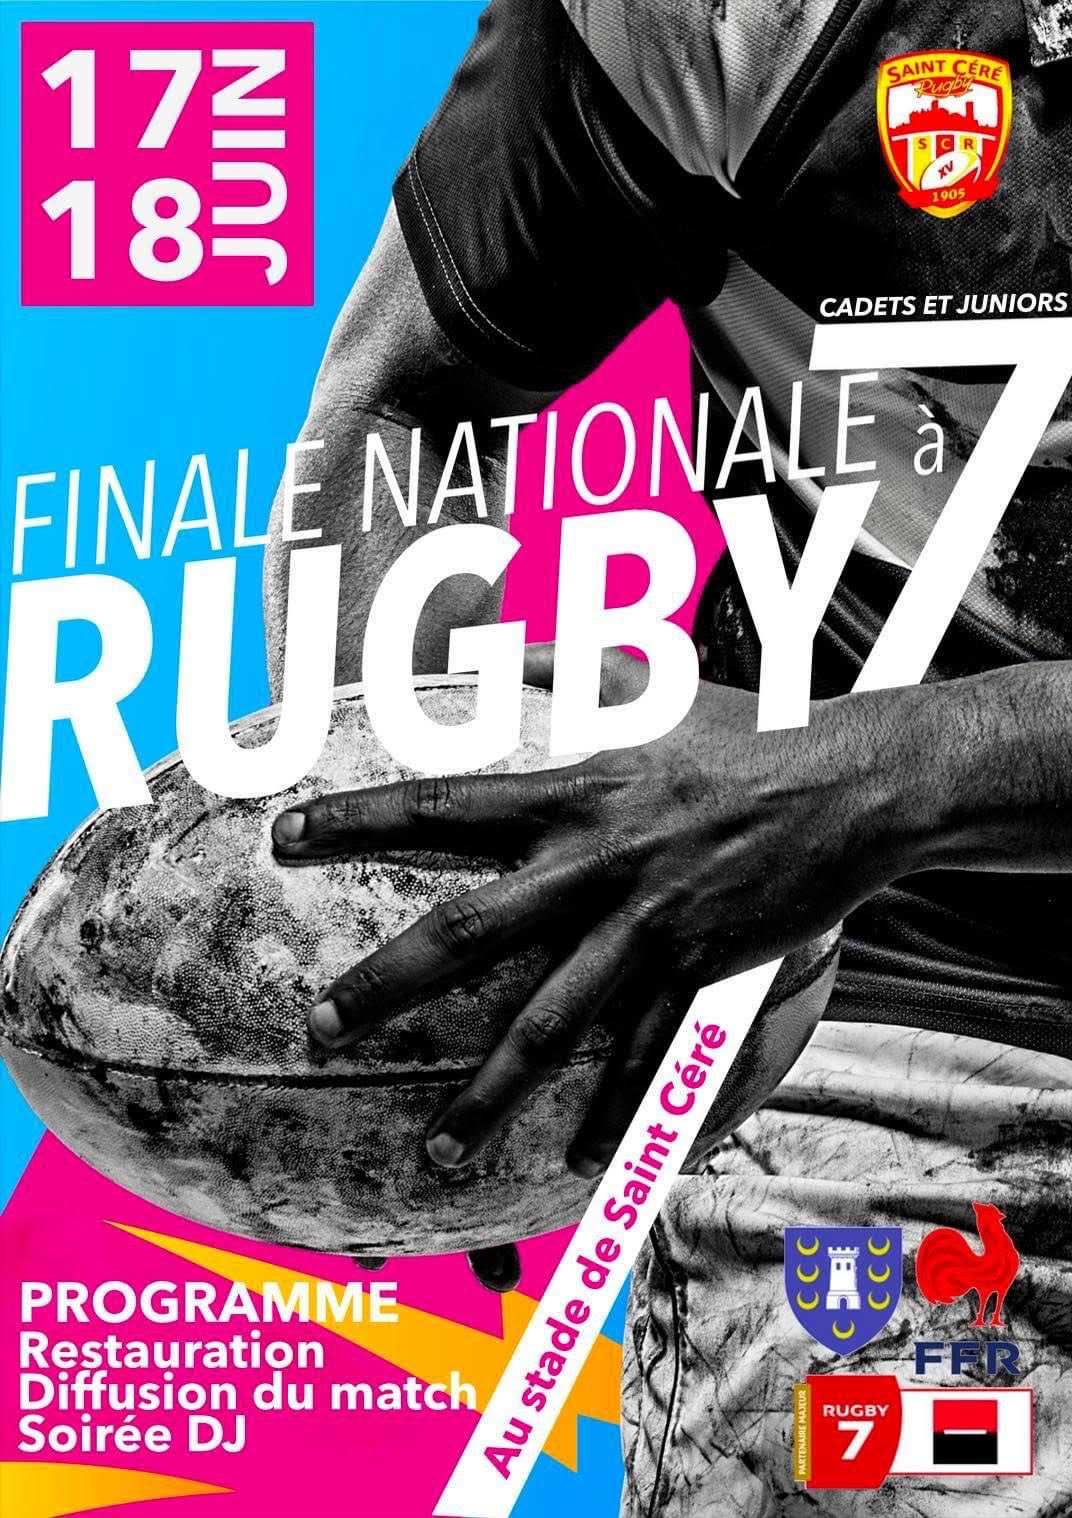 Figeac : Finale Nationale Rugby à 7 -  Cadets & Juniors -